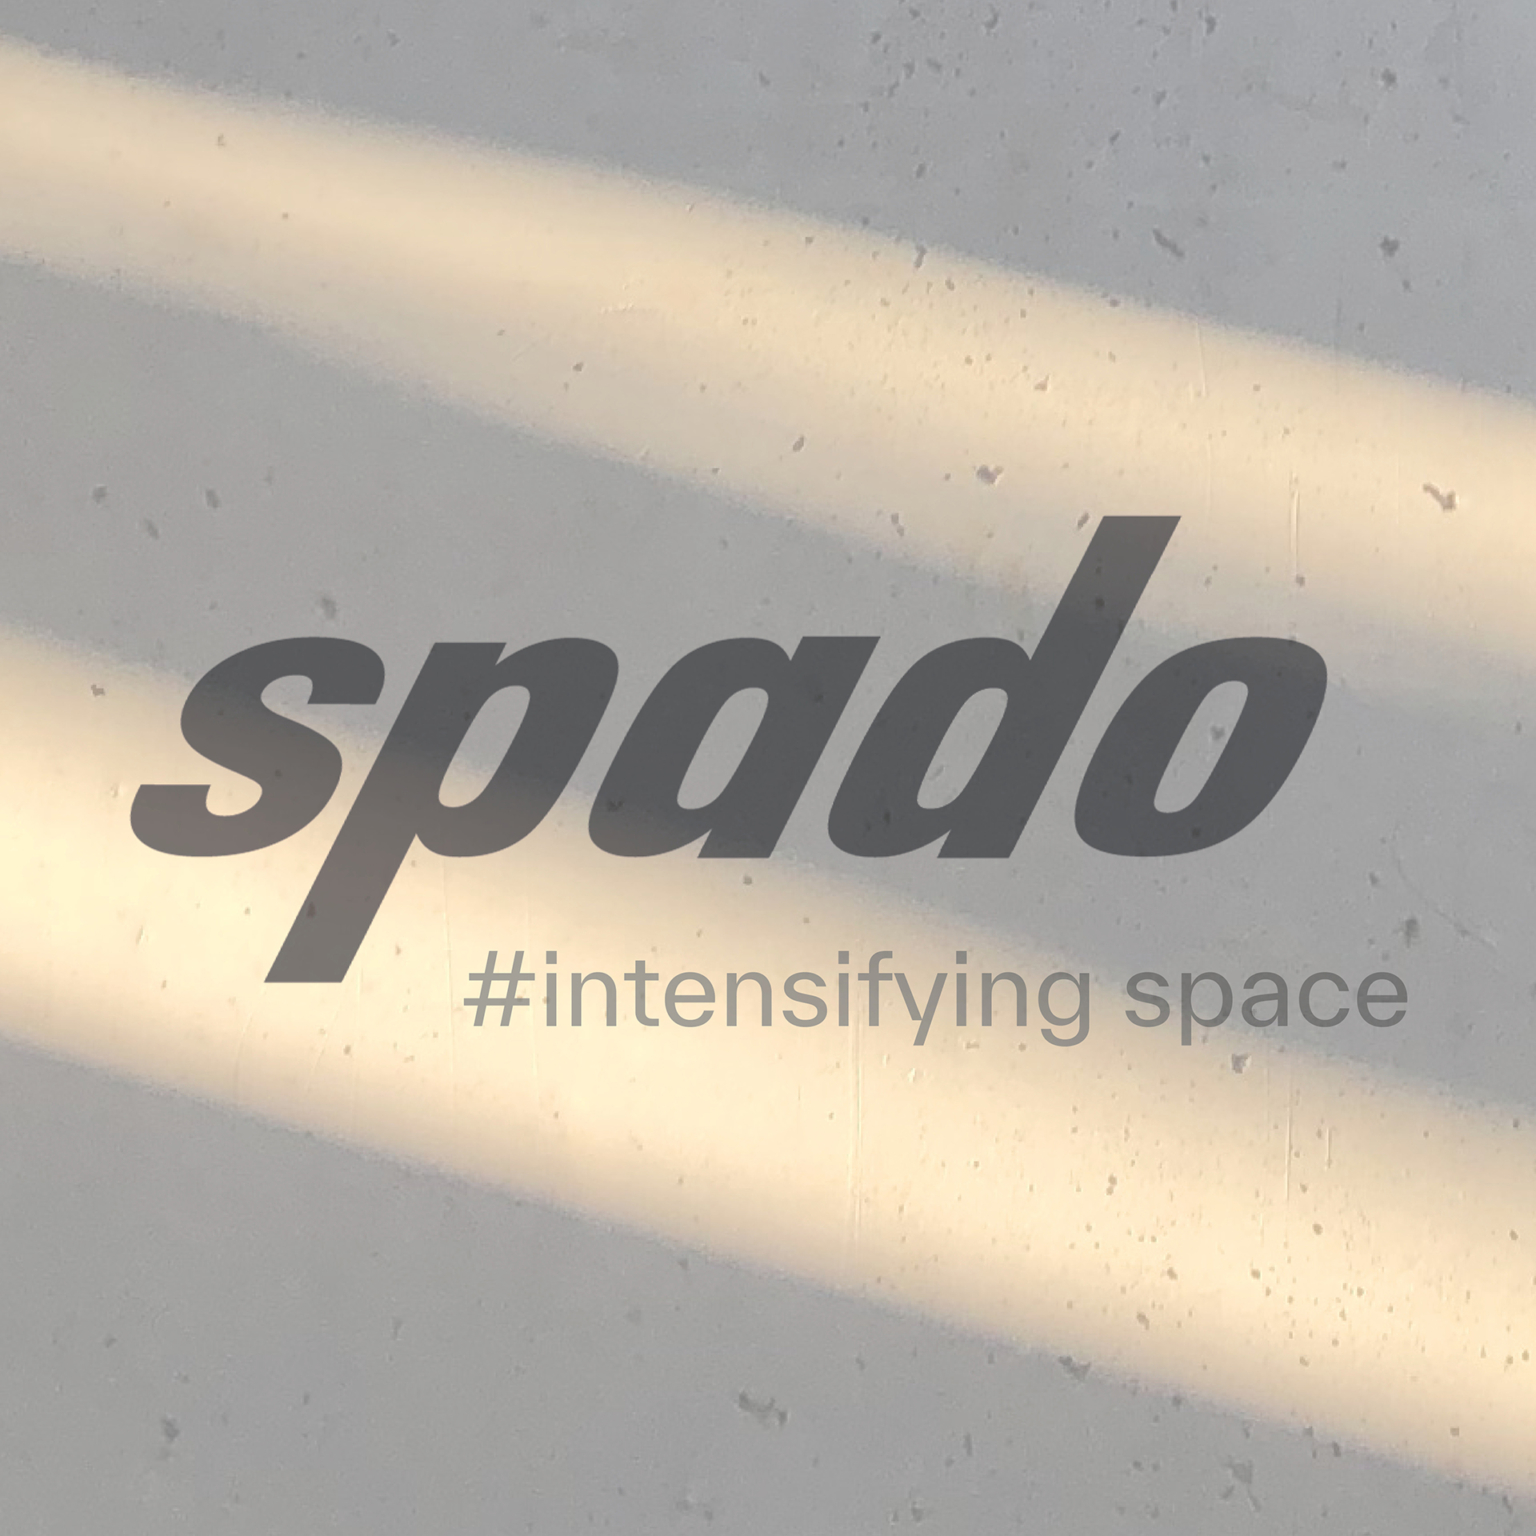 spado intensifying space